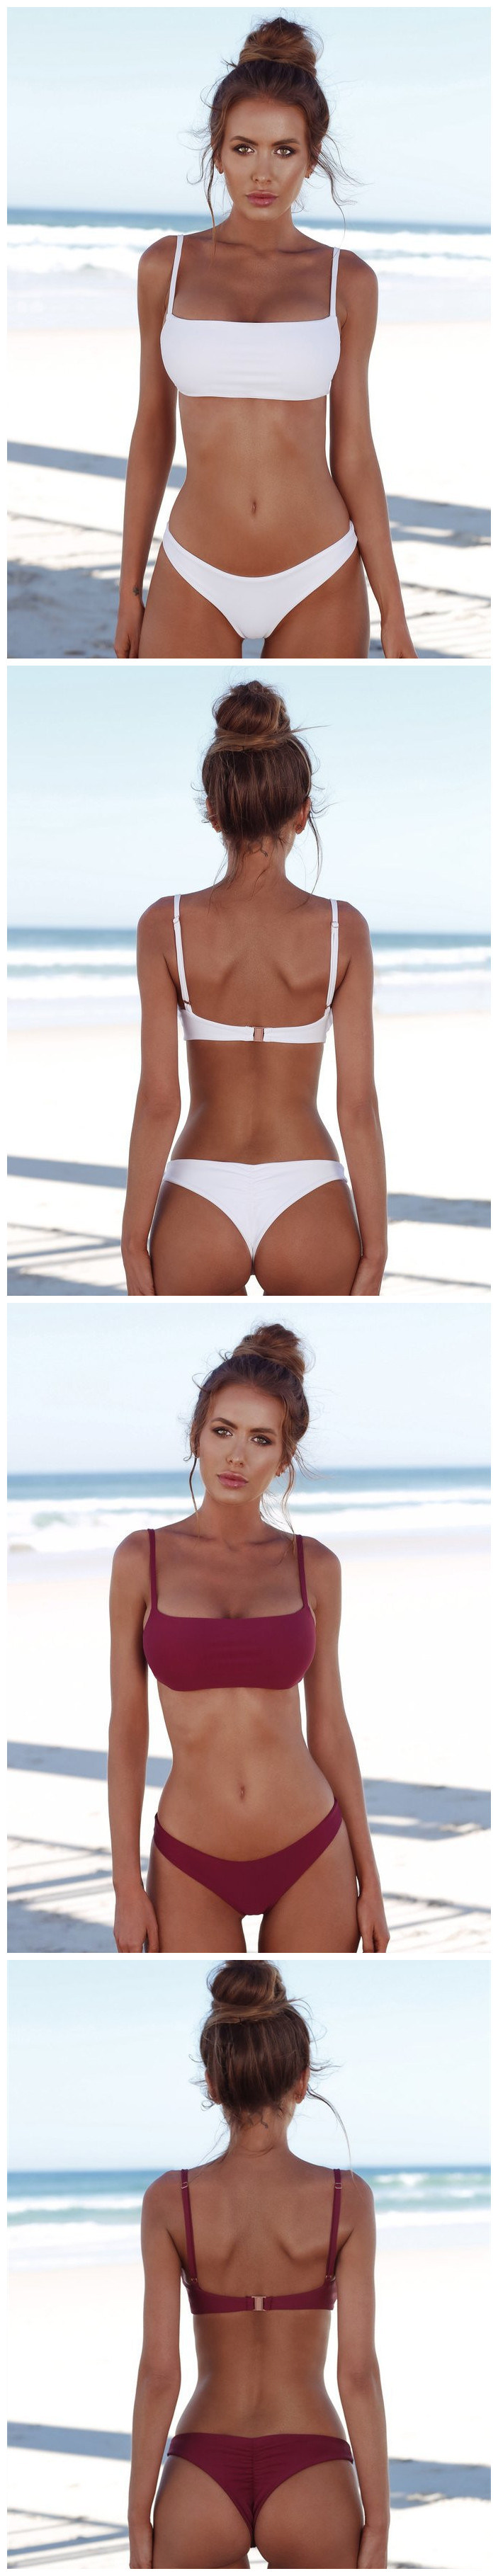 Hot Selling White Women Sexy Beach Wear Two-Piece Bikini Swimwear